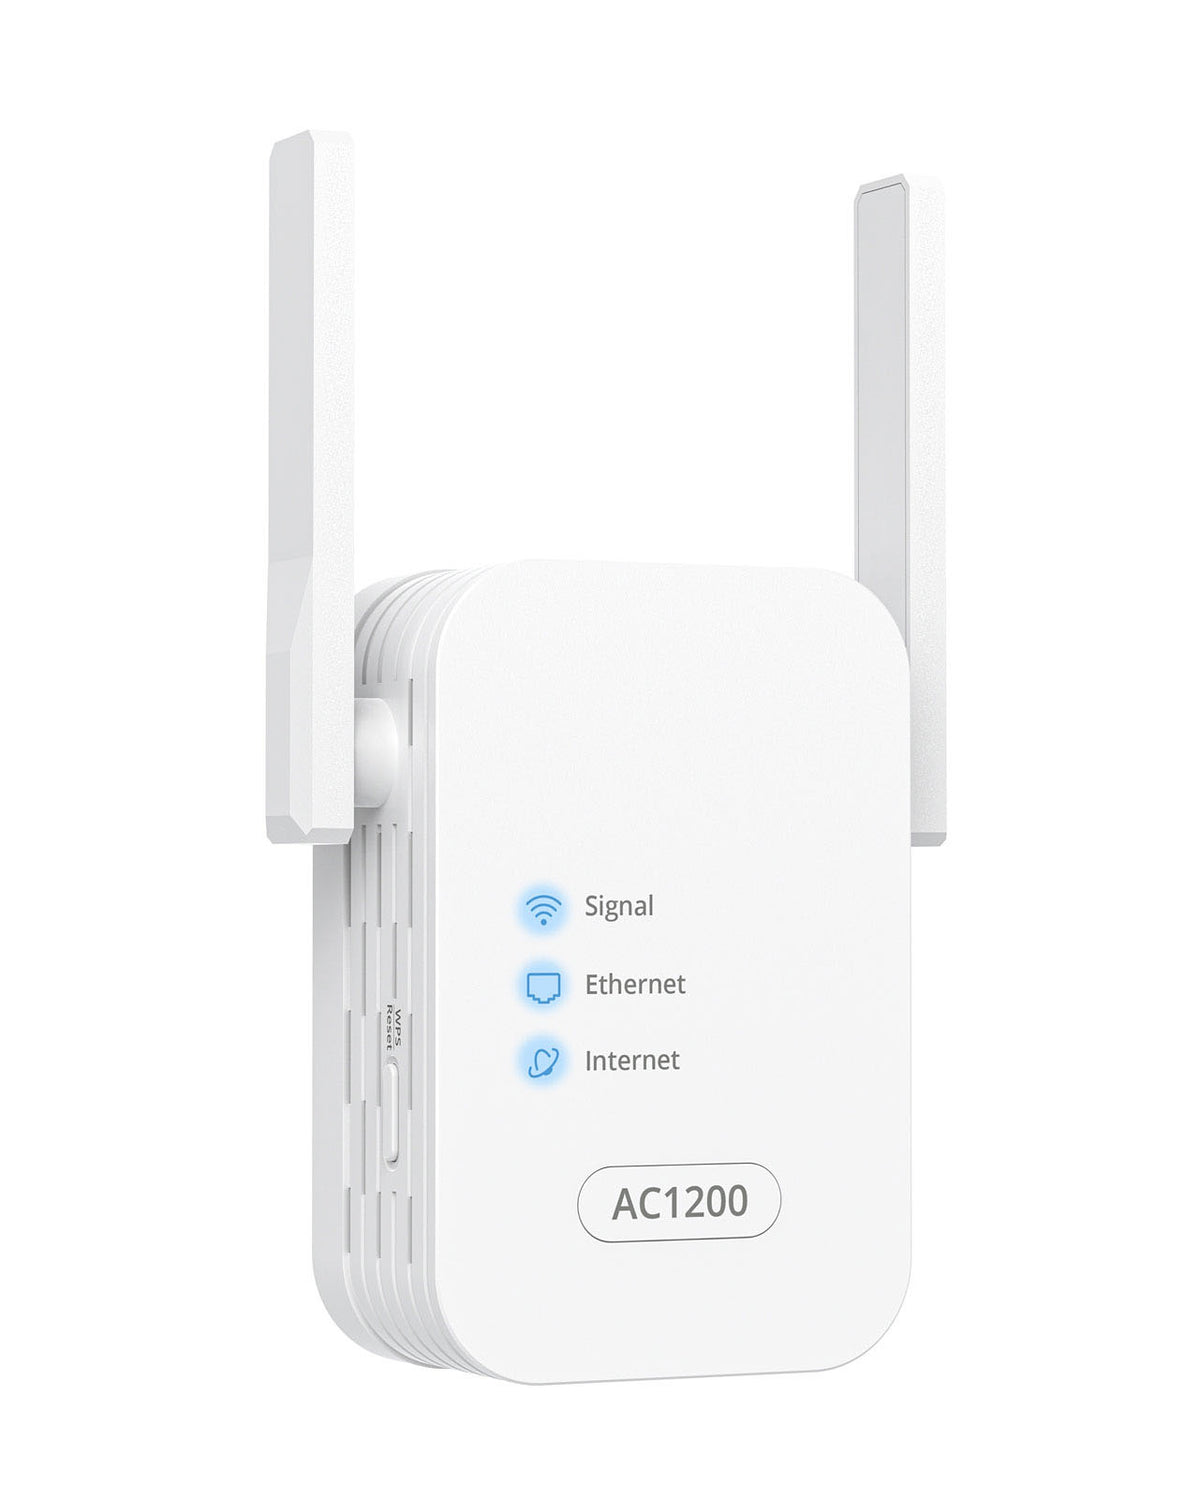 ioGiant AC1200 wifi extender